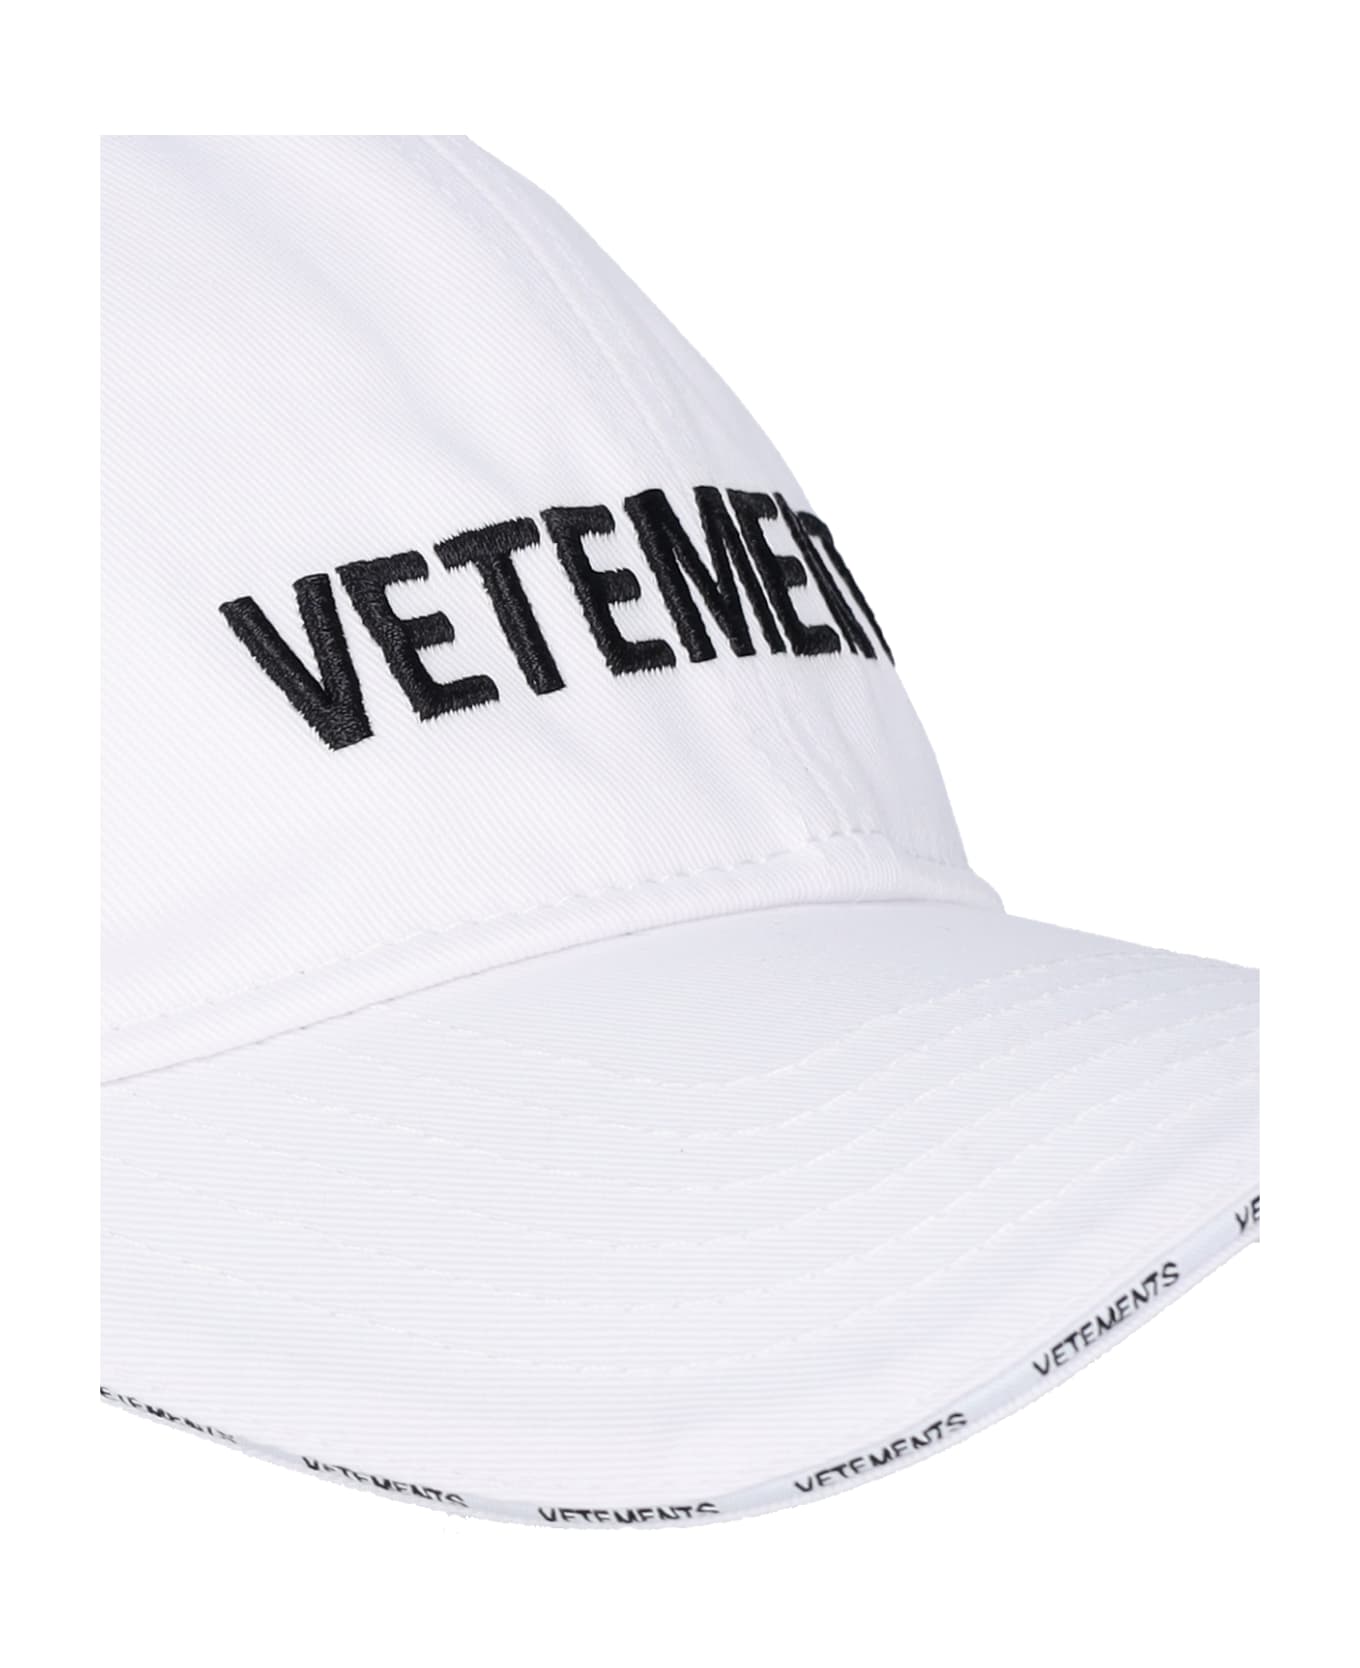 VETEMENTS Hat - White